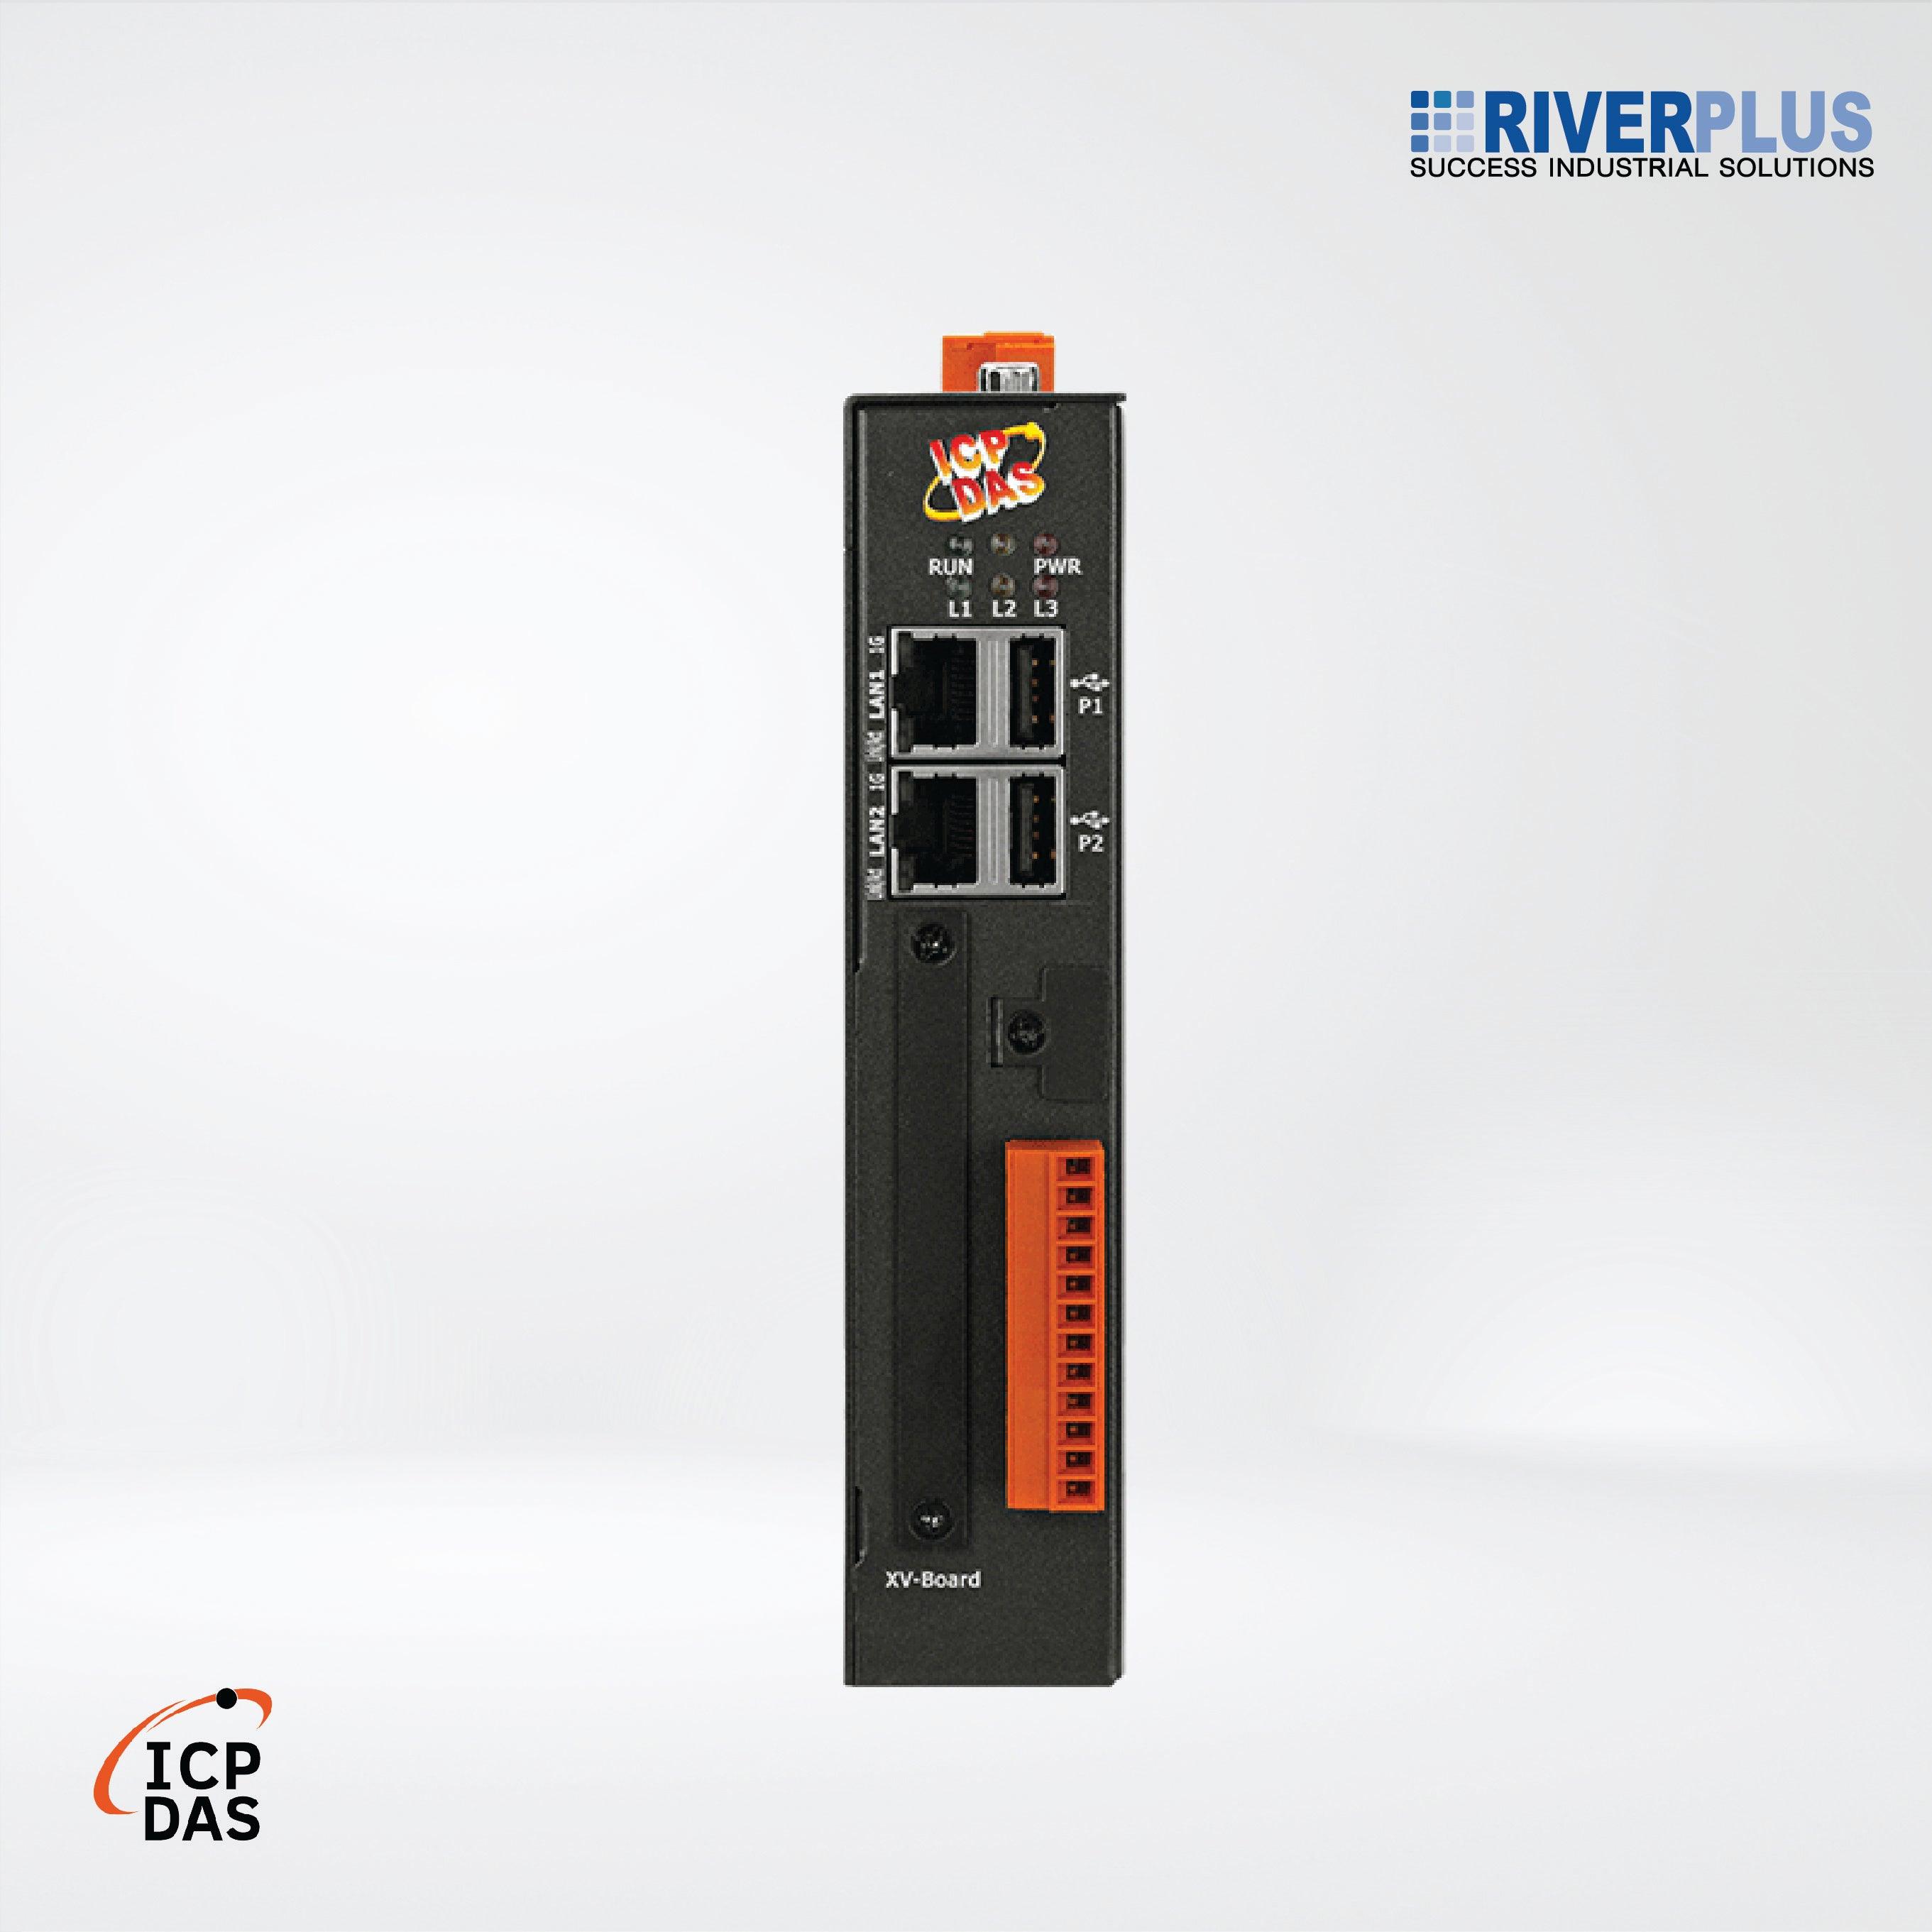 IEC850-211-S Modbus TCP Master to IEC-61850 Server Gateway - Riverplus